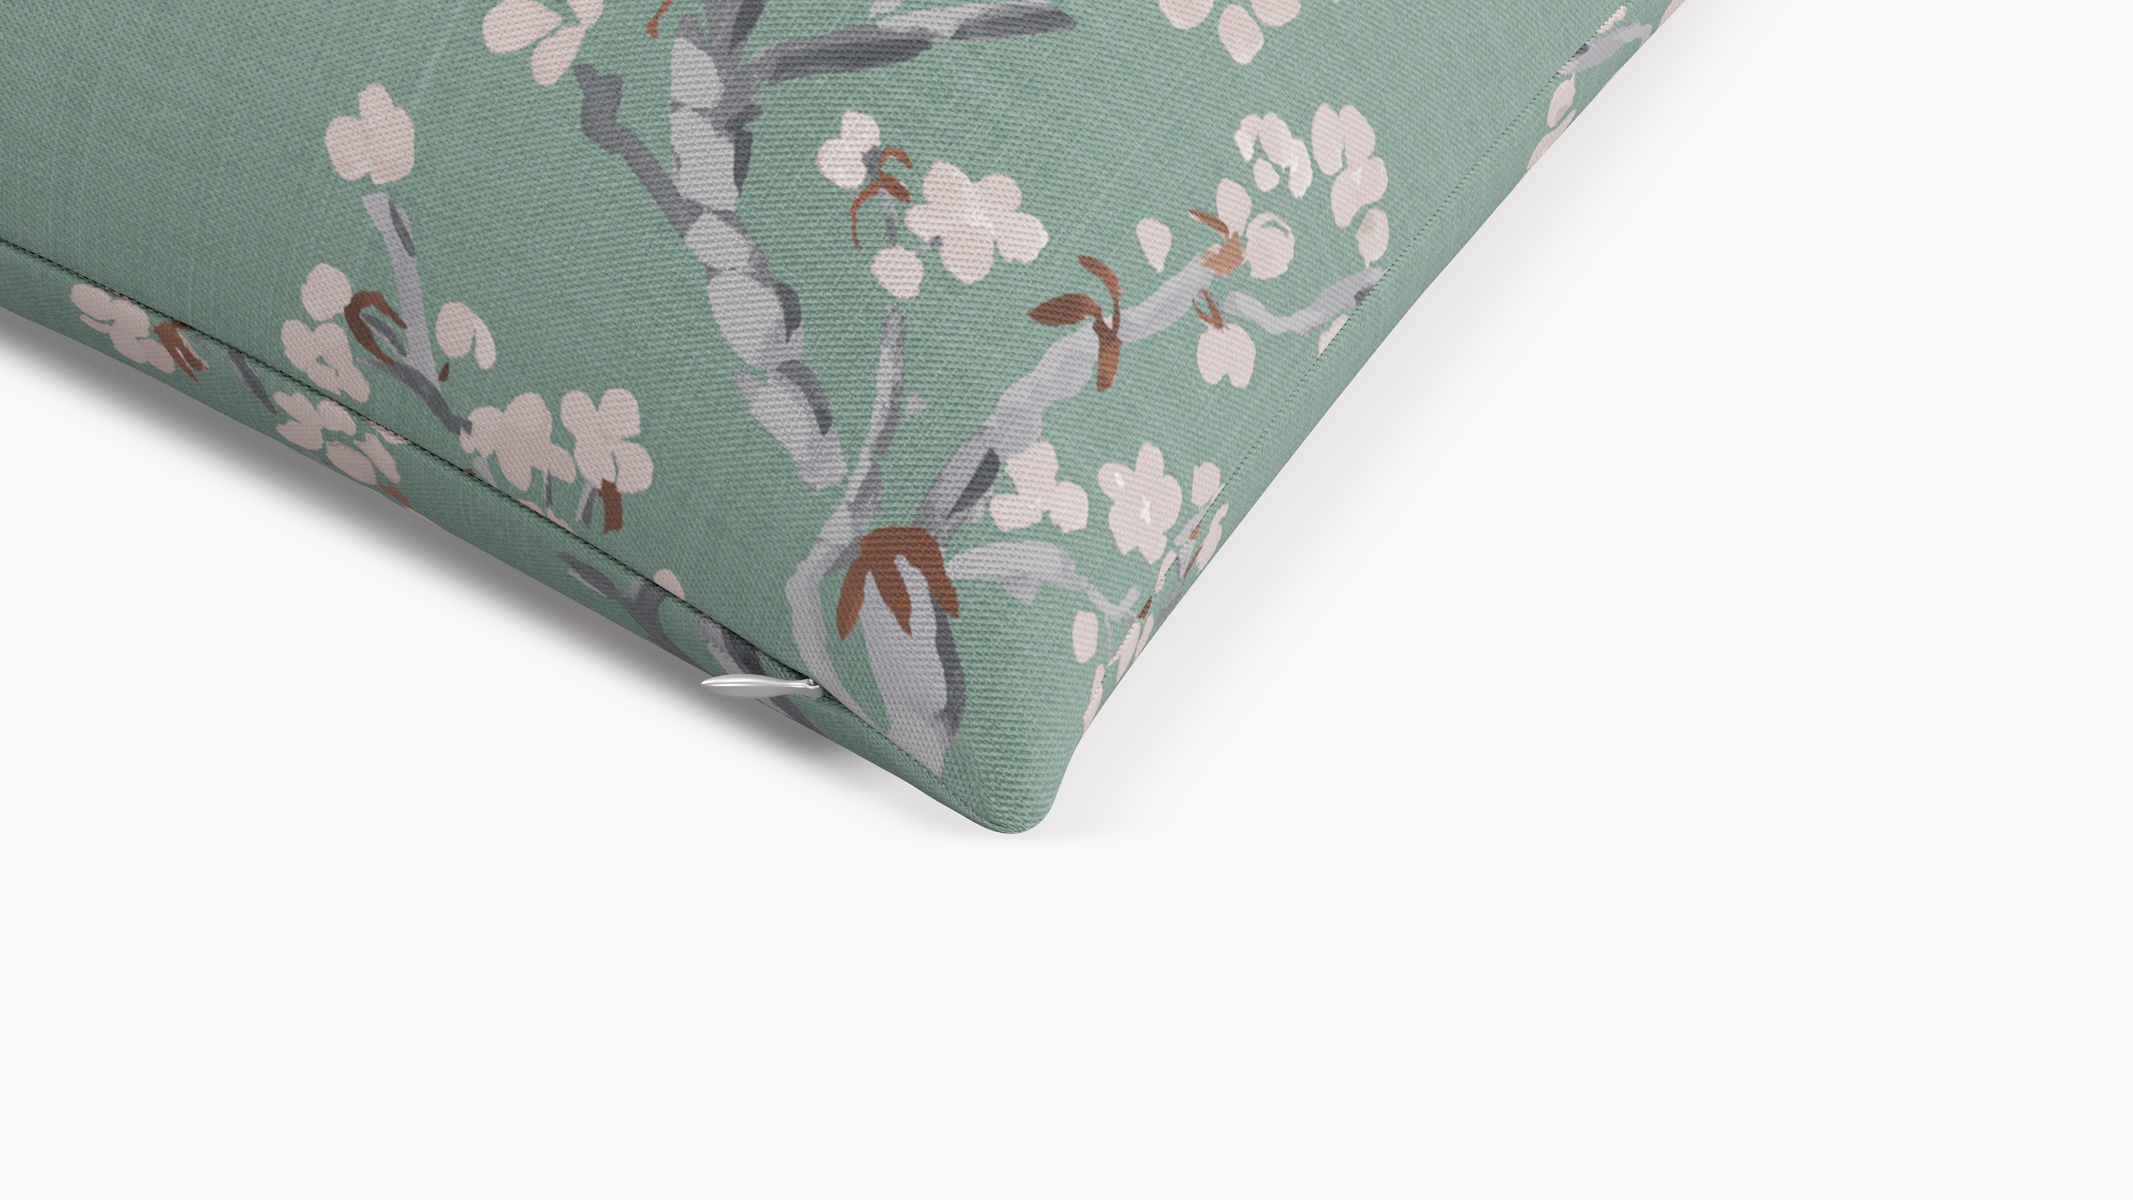 Throw Pillow 20", Mint Cherry Blossom, 20" x 20" - Image 1